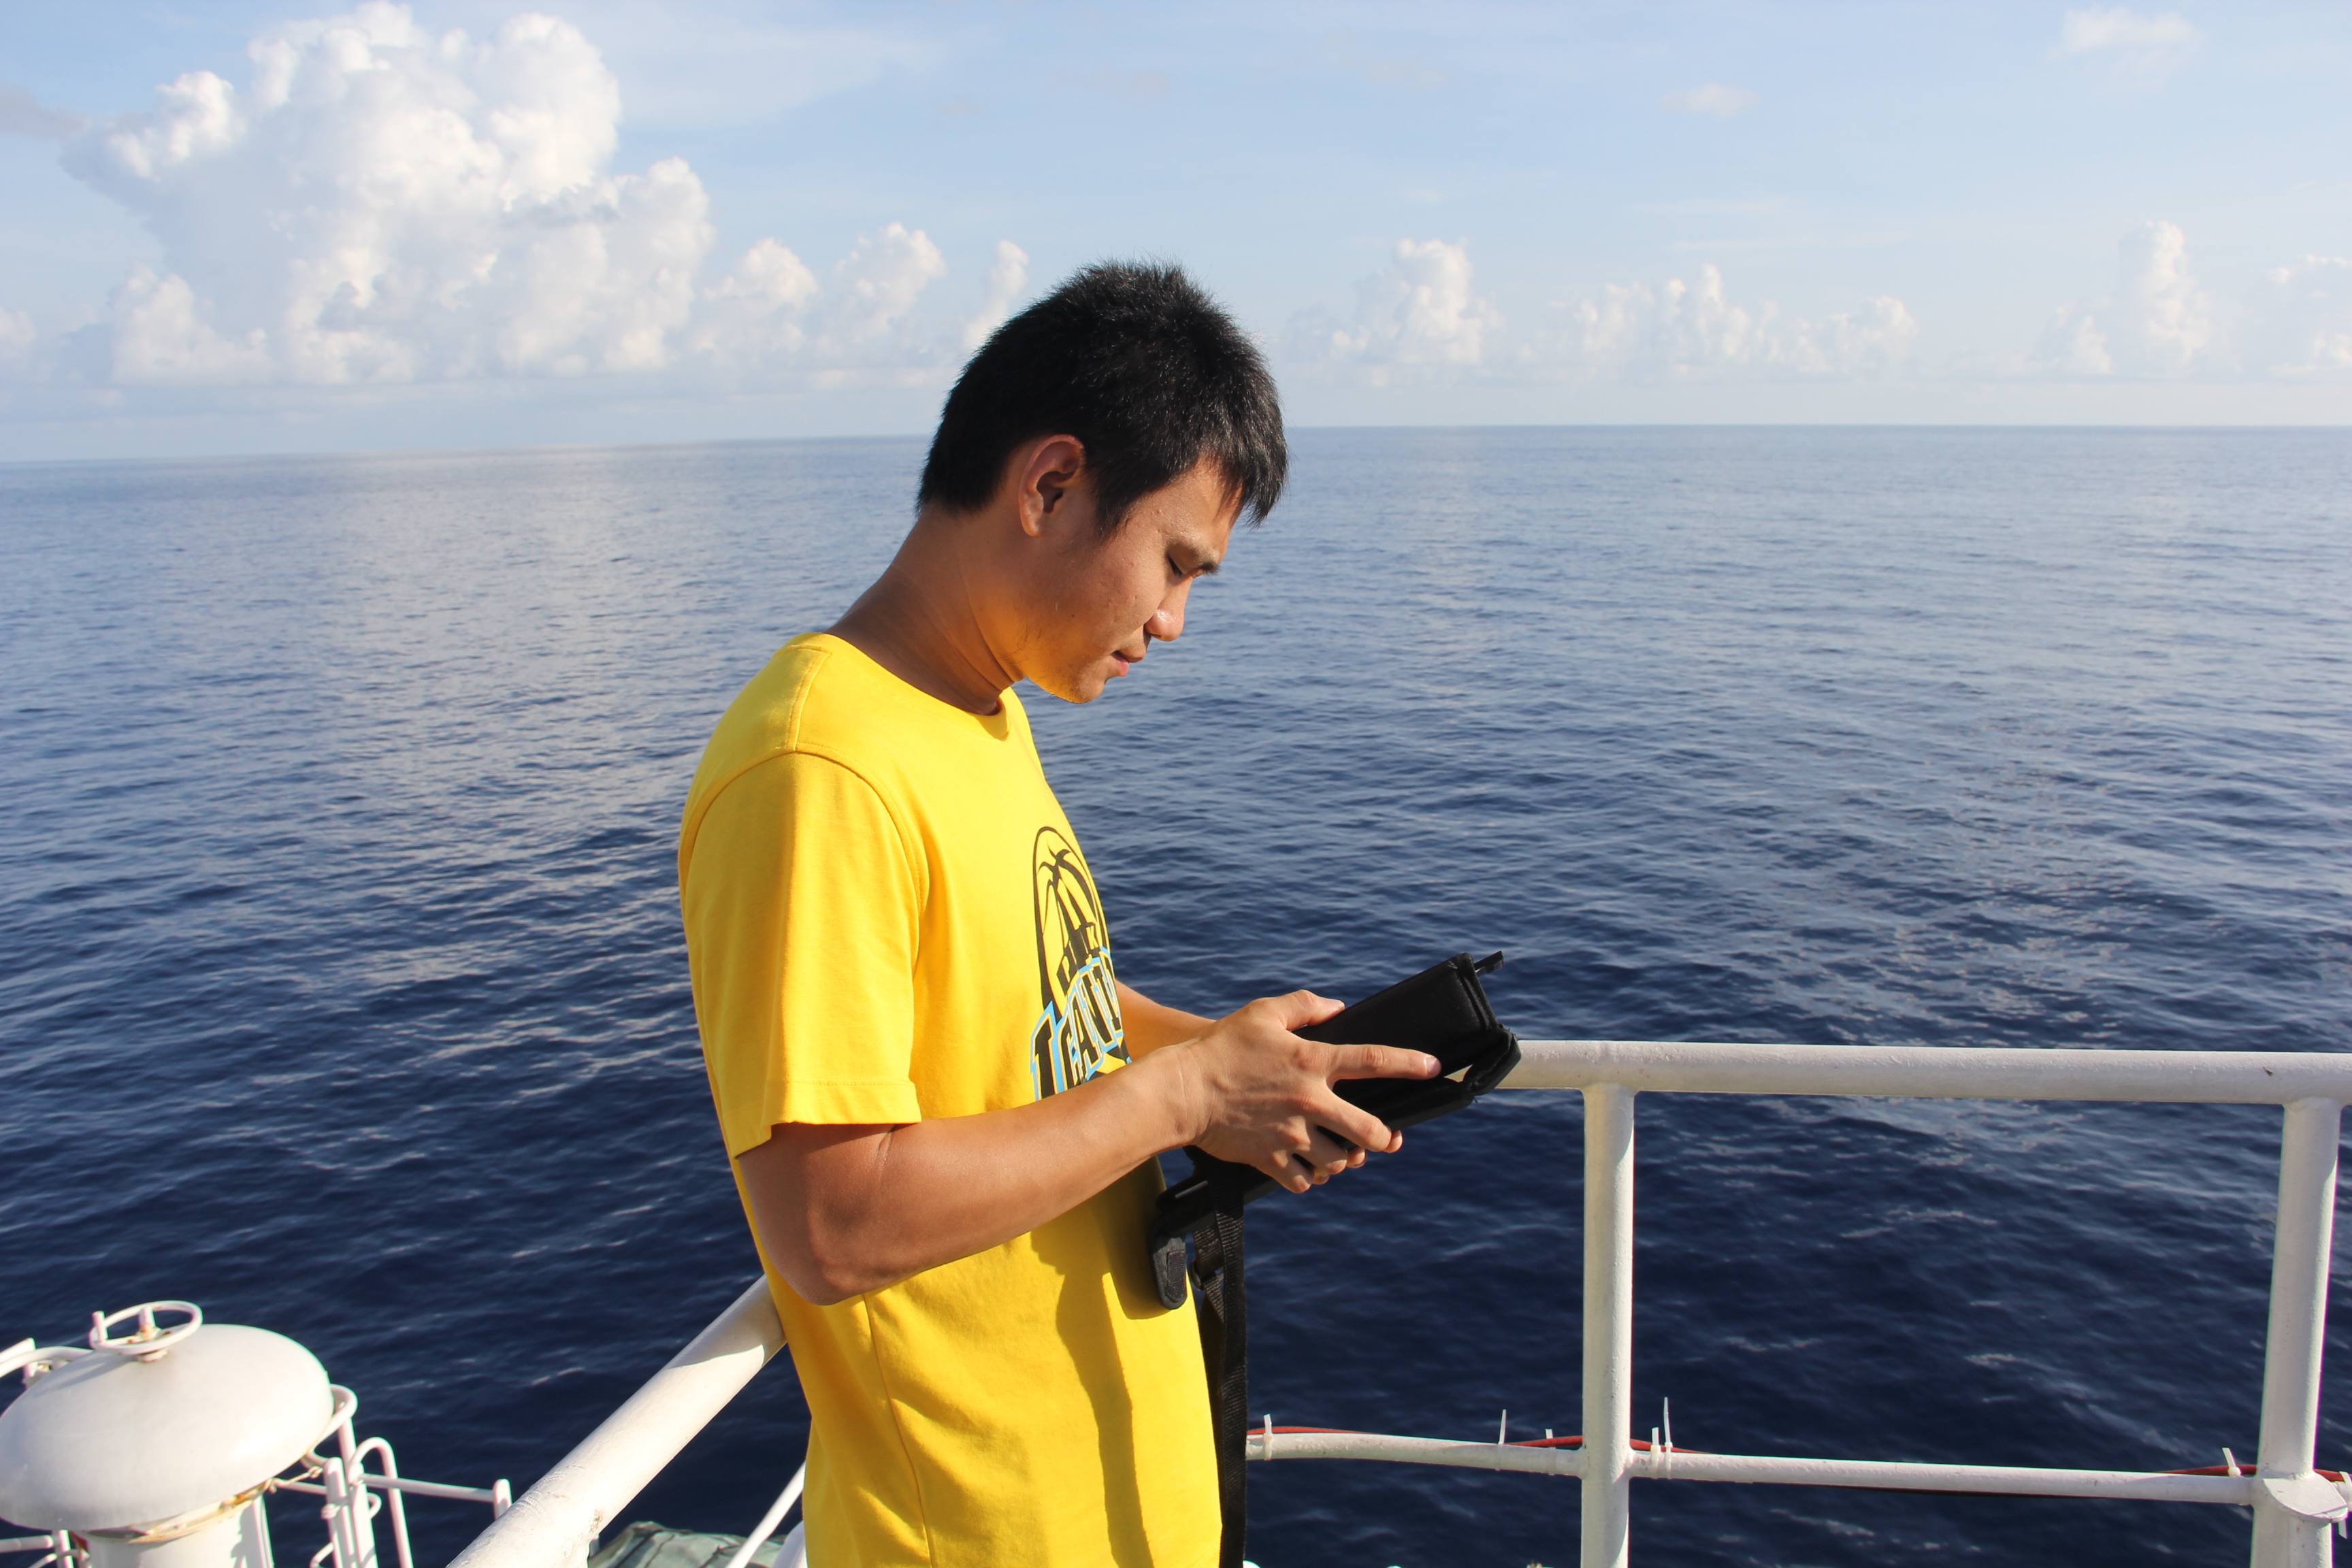 Measurements onboard by Mr. Qingyang Sun